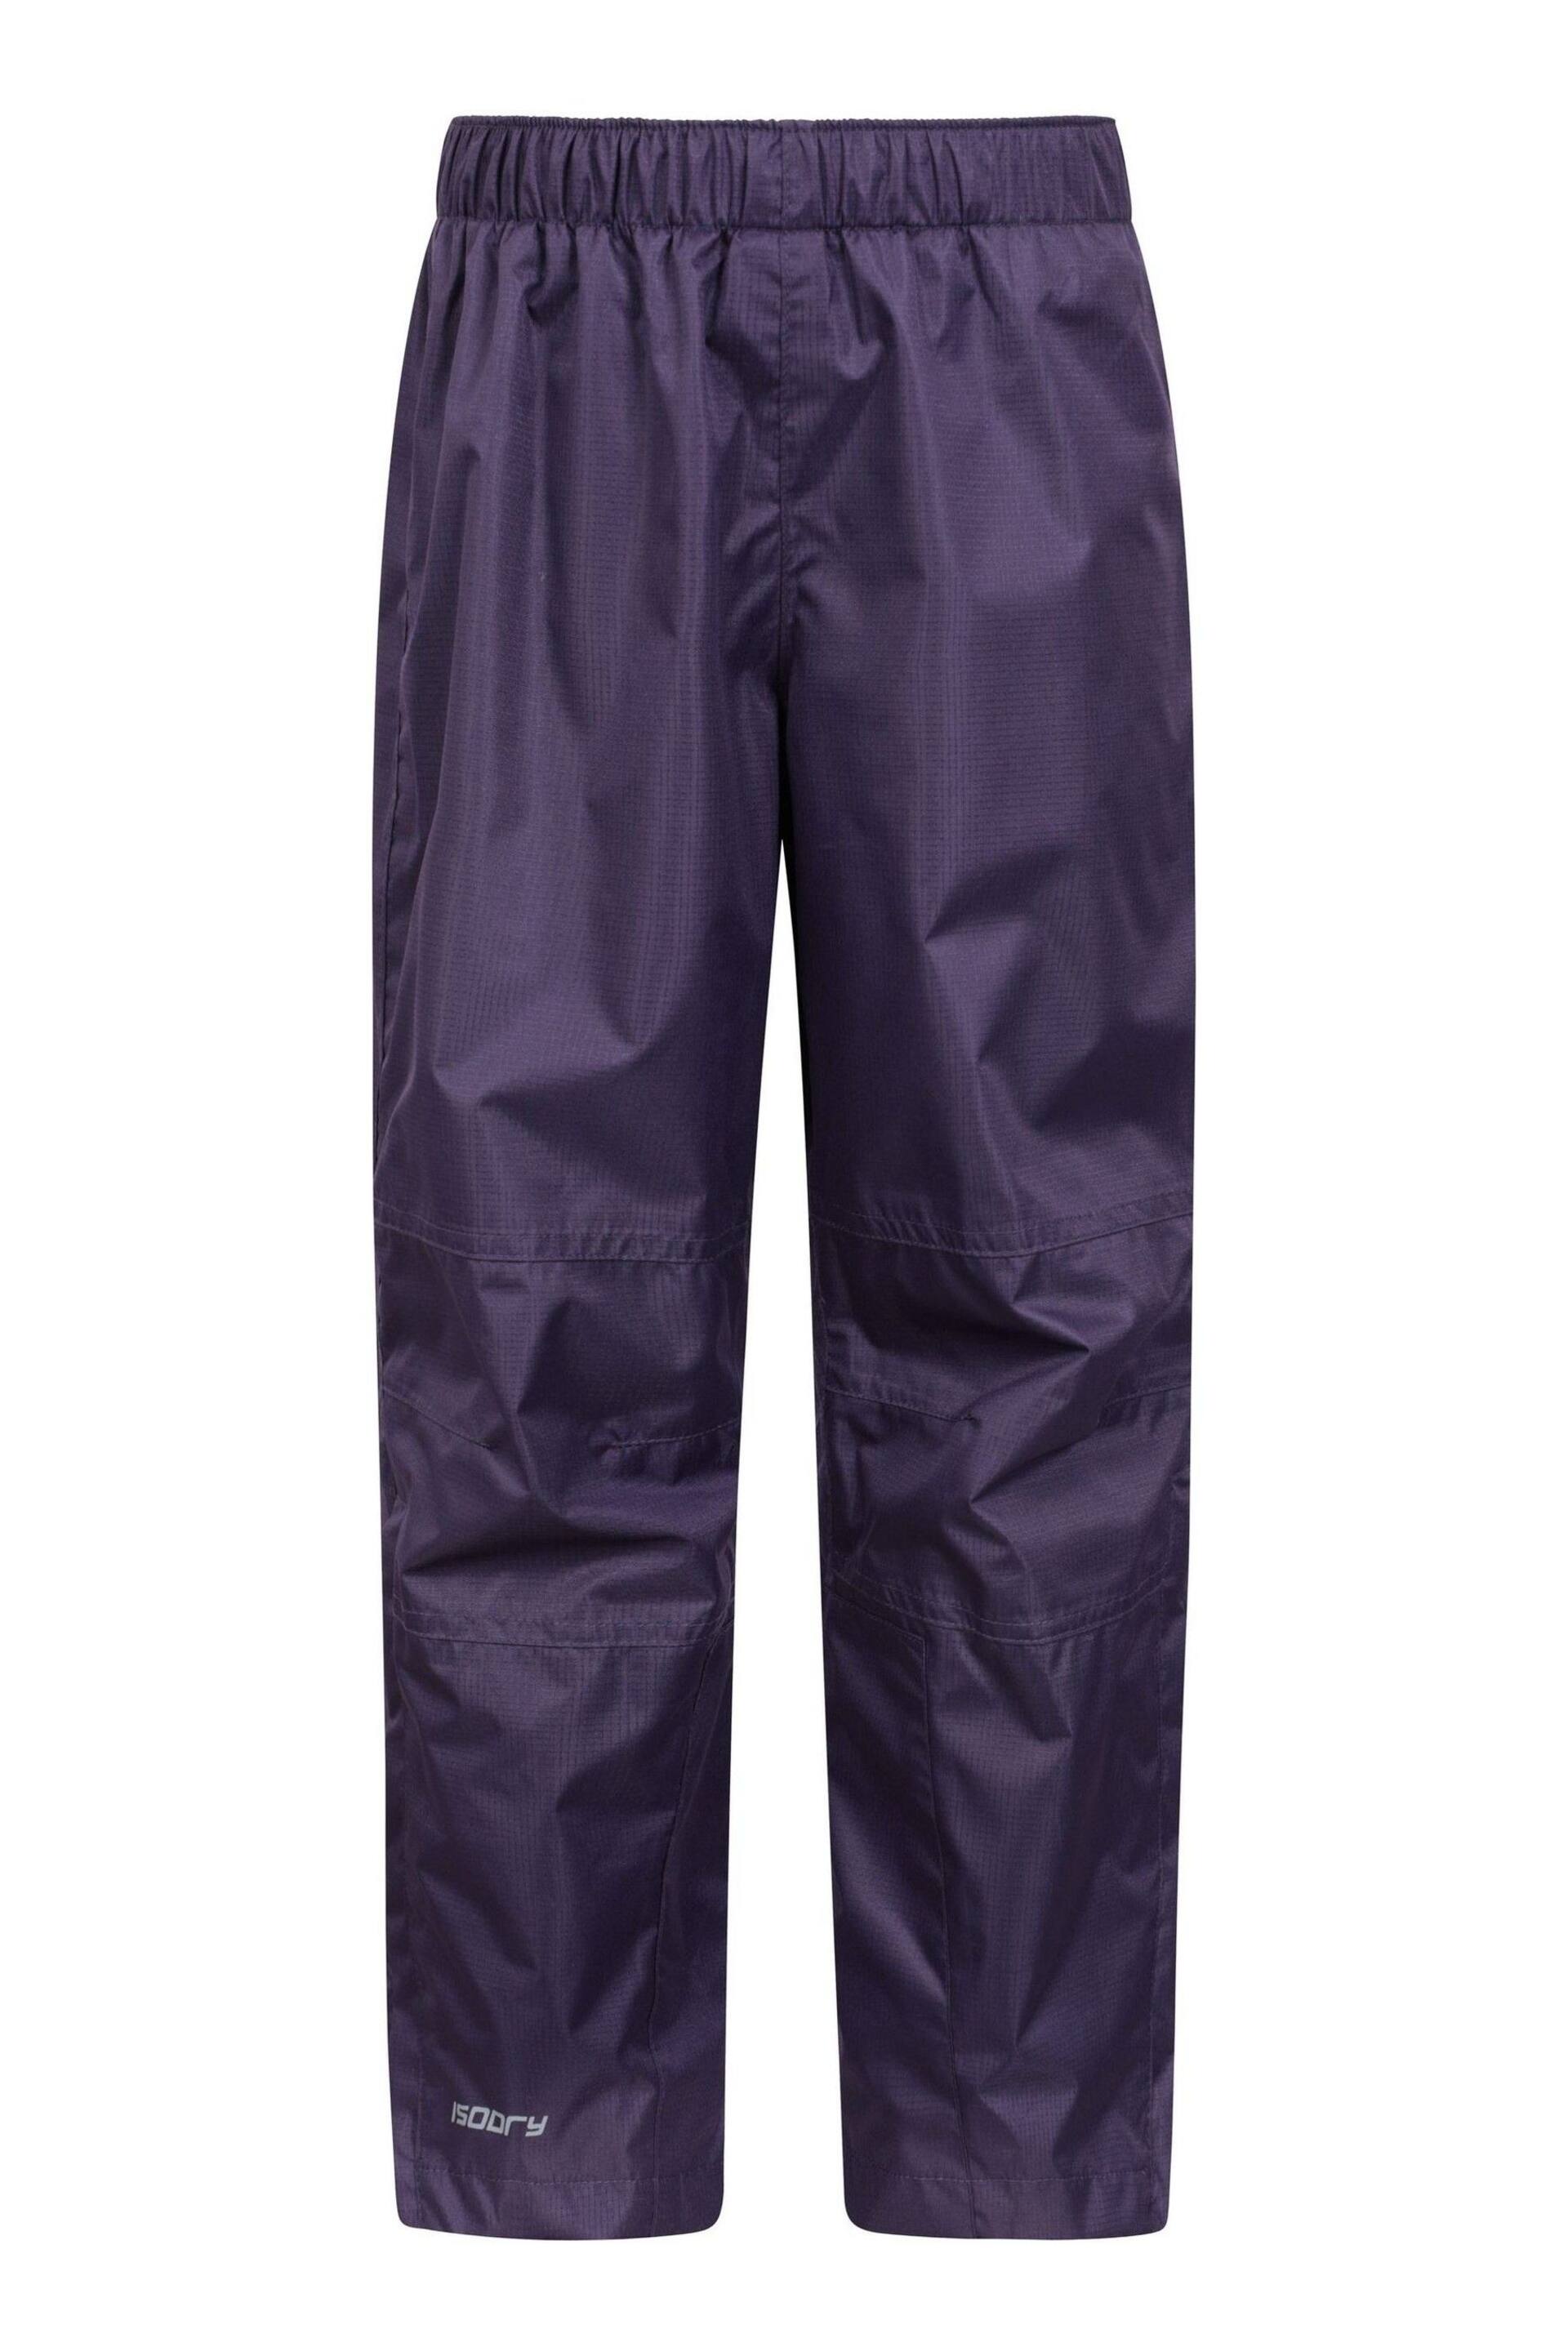 Mountain Warehouse Purple Kids Spray Waterproof Trousers - Image 1 of 5